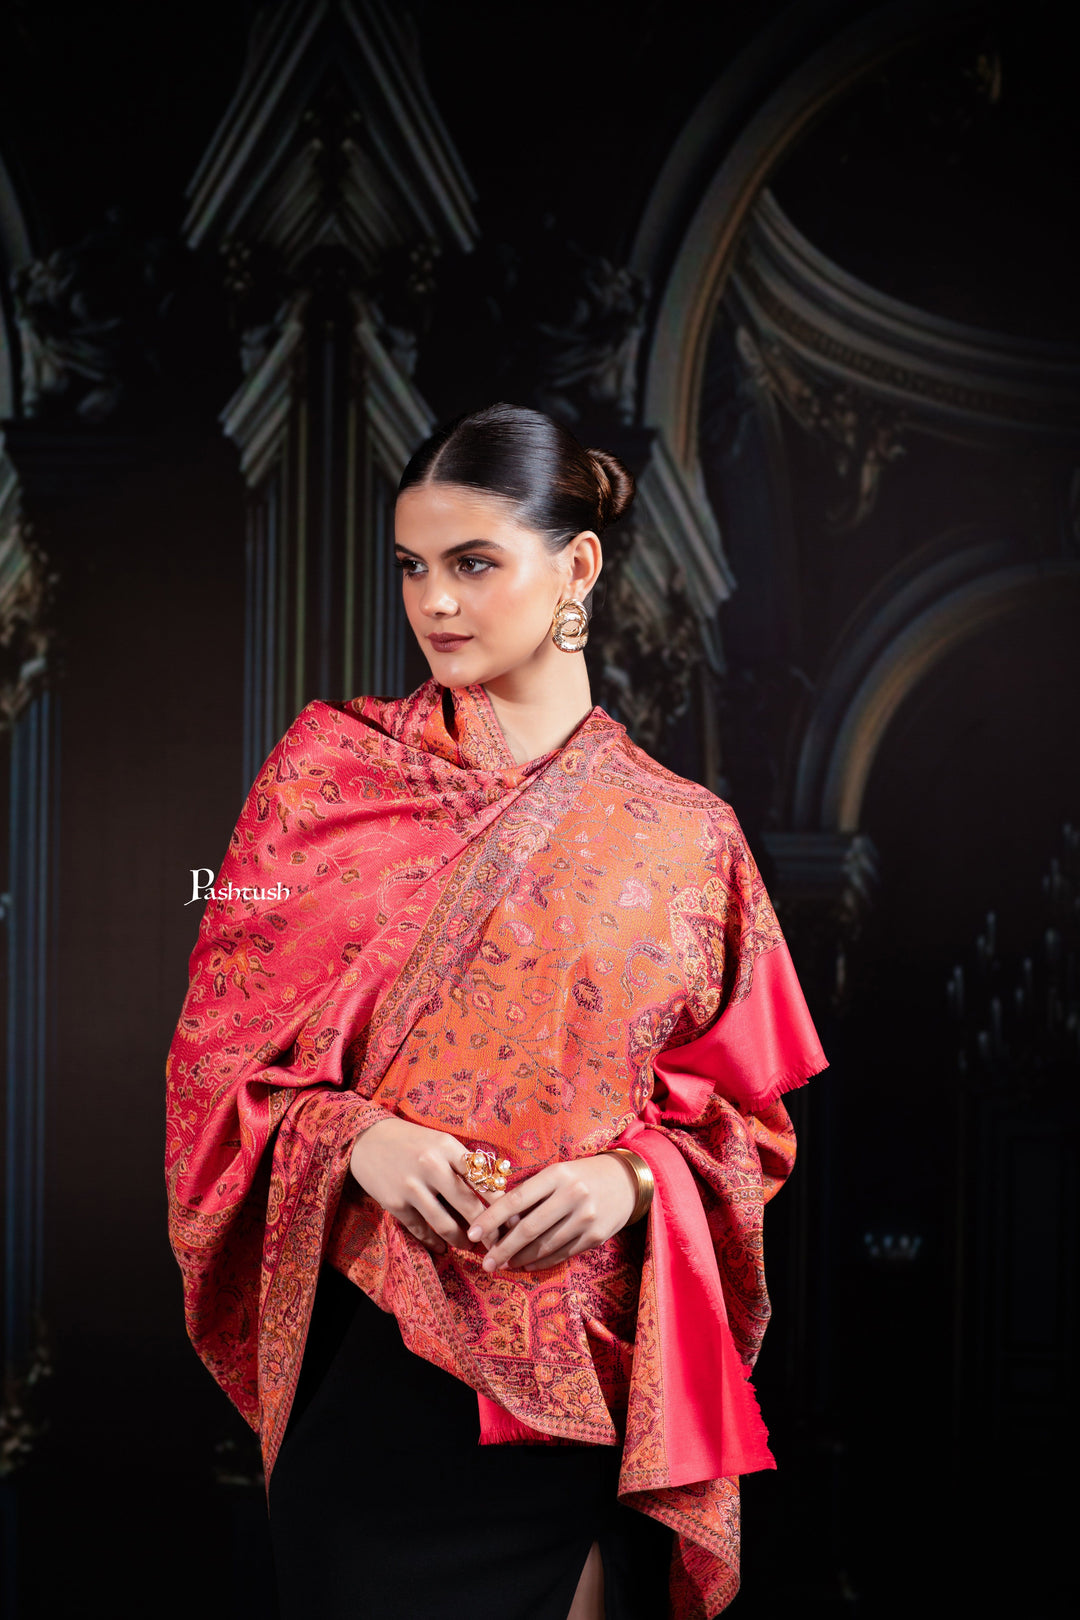 Pashtush India womens scarf and Stoles Pashtush Womens Faux Pashmina Shawl, Woven Jamawar Design, Neon Pink